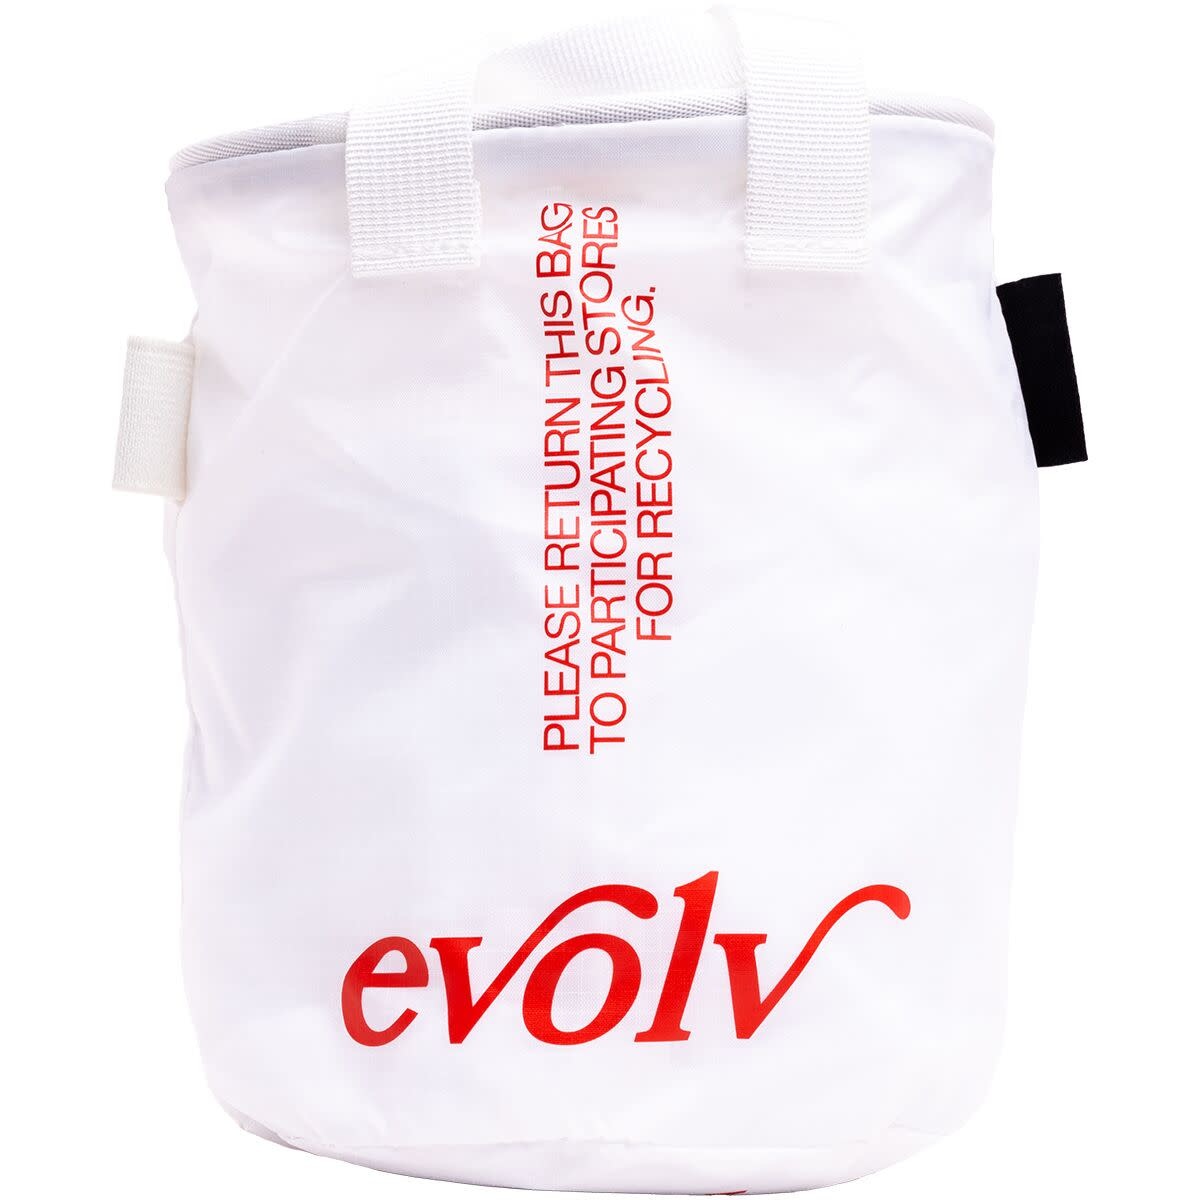 Evolv - Bodega Chalk Bag - White/Red